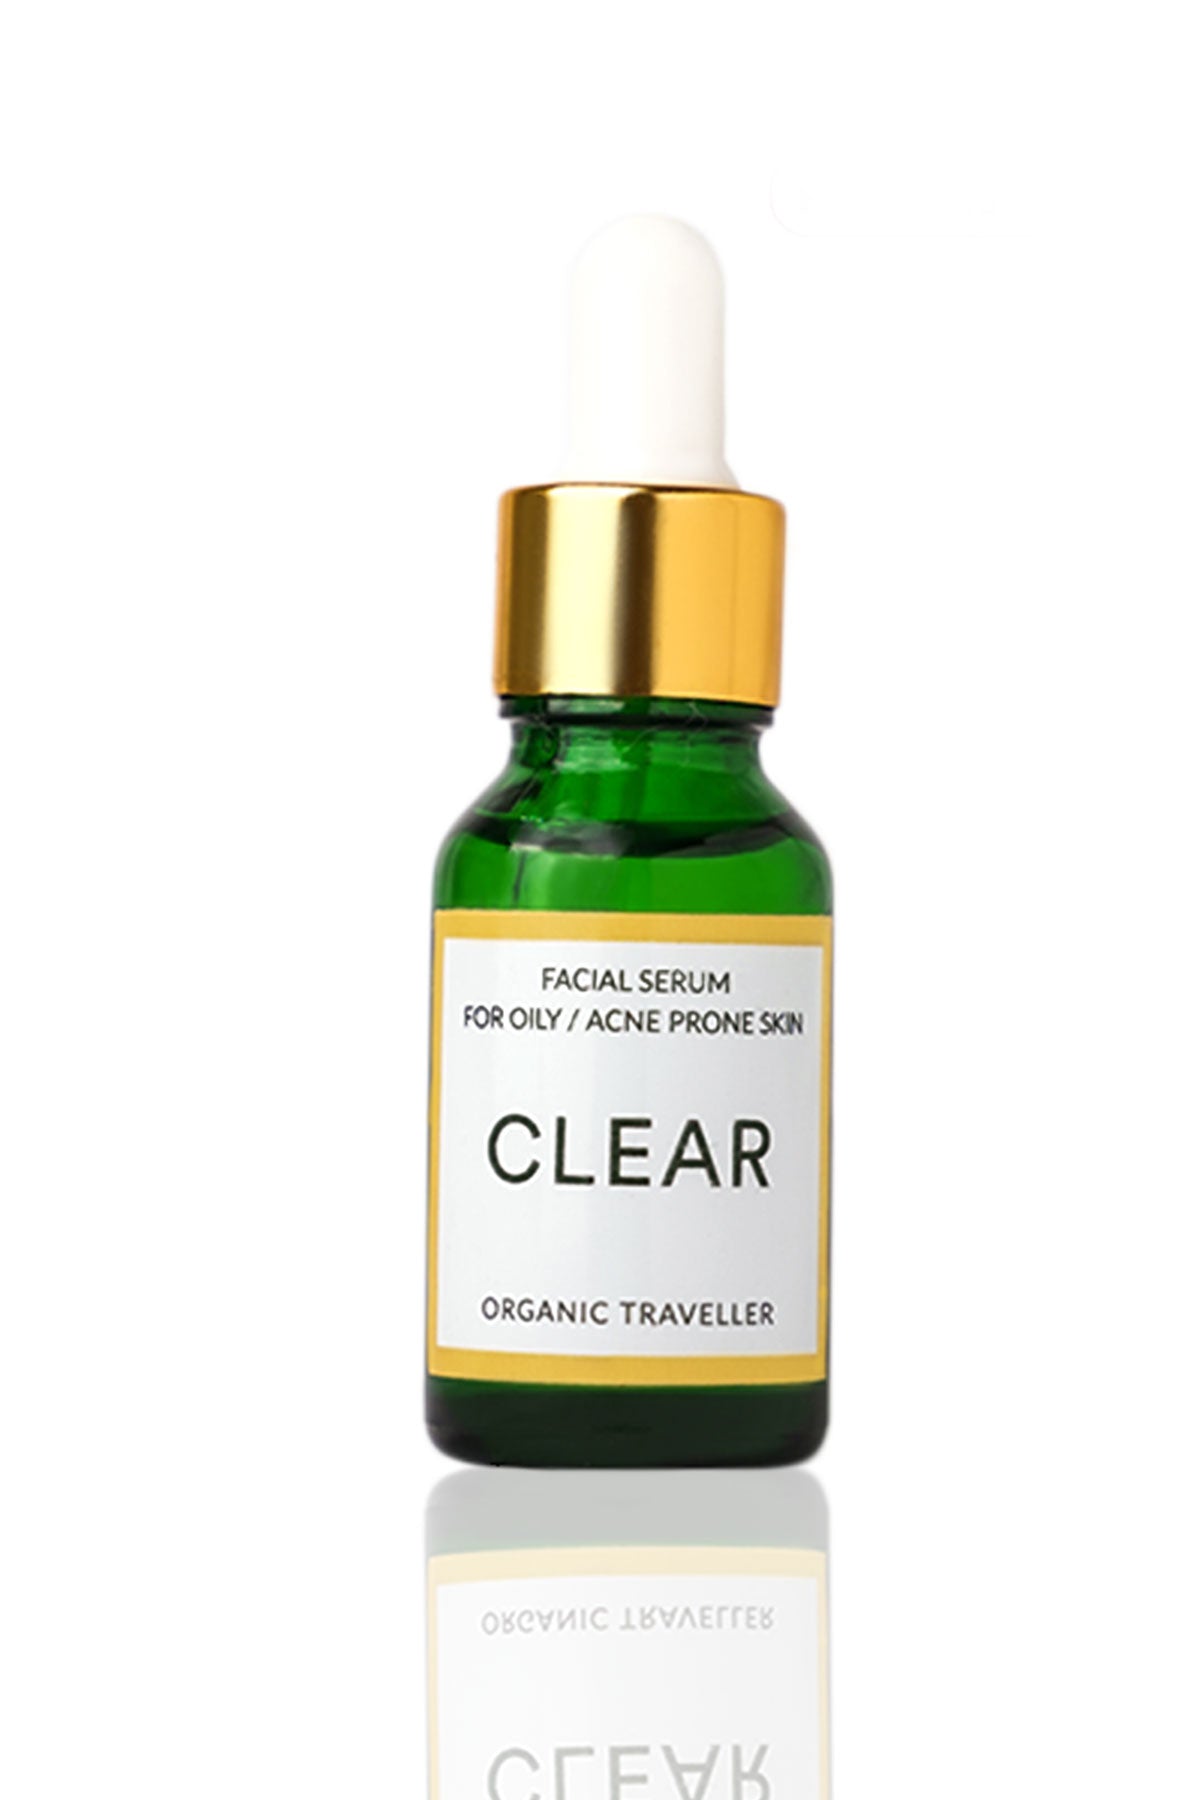 Clear: Acne clearing serum